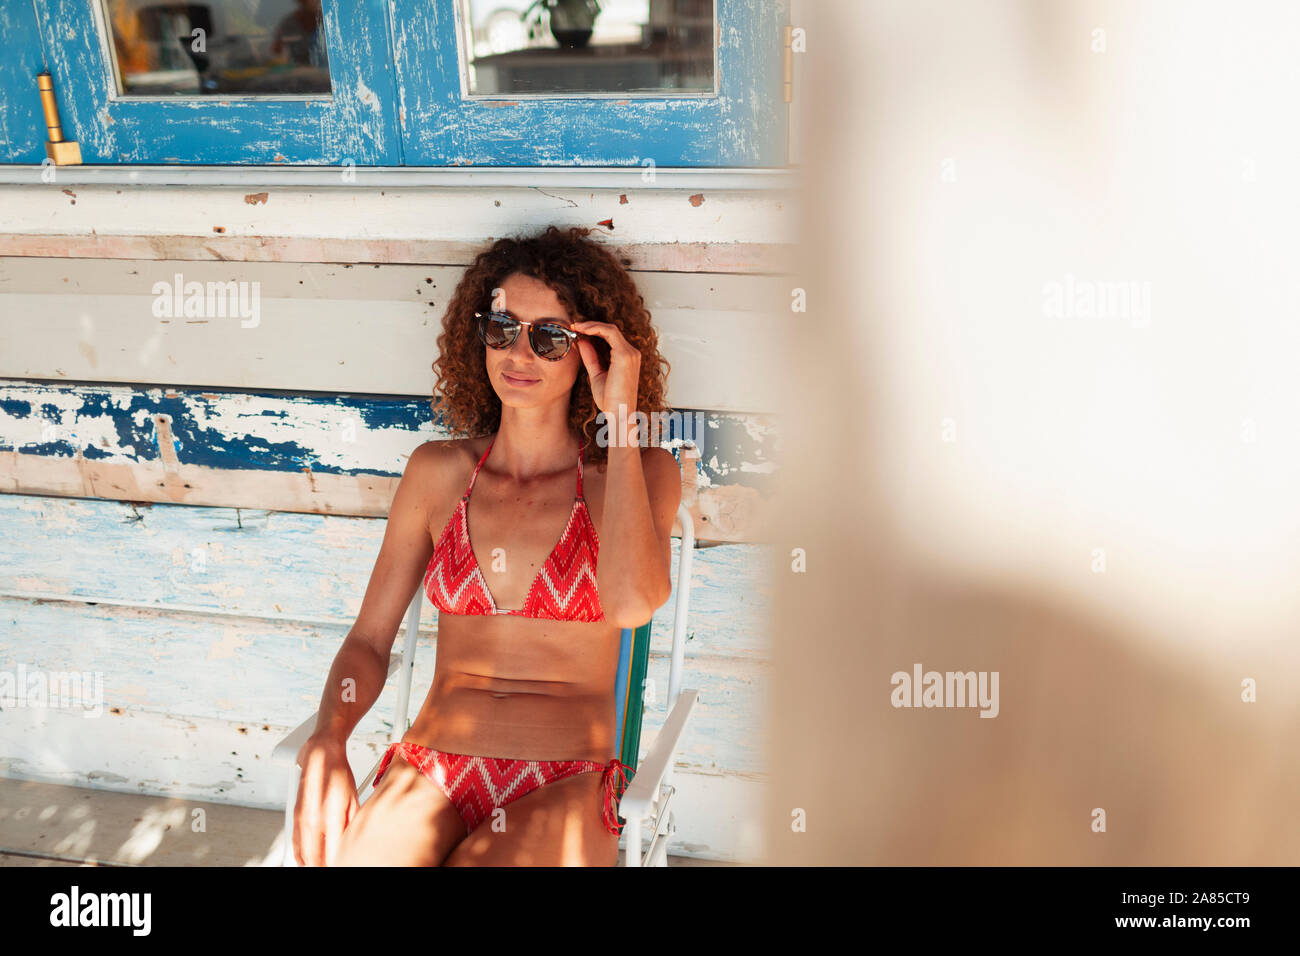 Young woman in bikini relaxing on beach hut patio Stock Photo